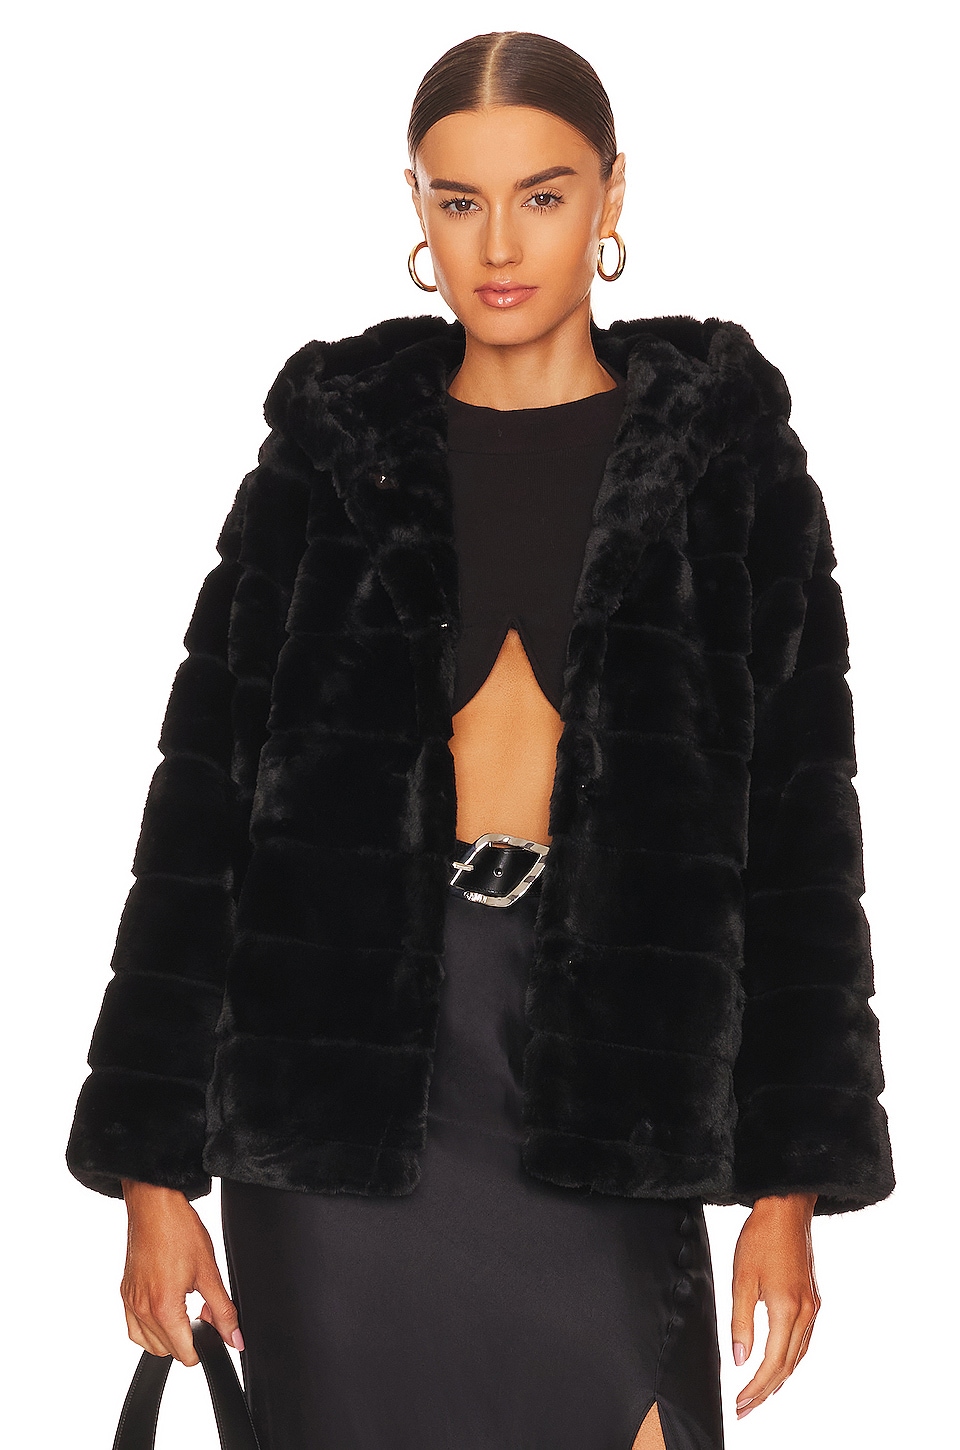 Apparis Goldie 5 Faux Fur Jacket in Noir | REVOLVE